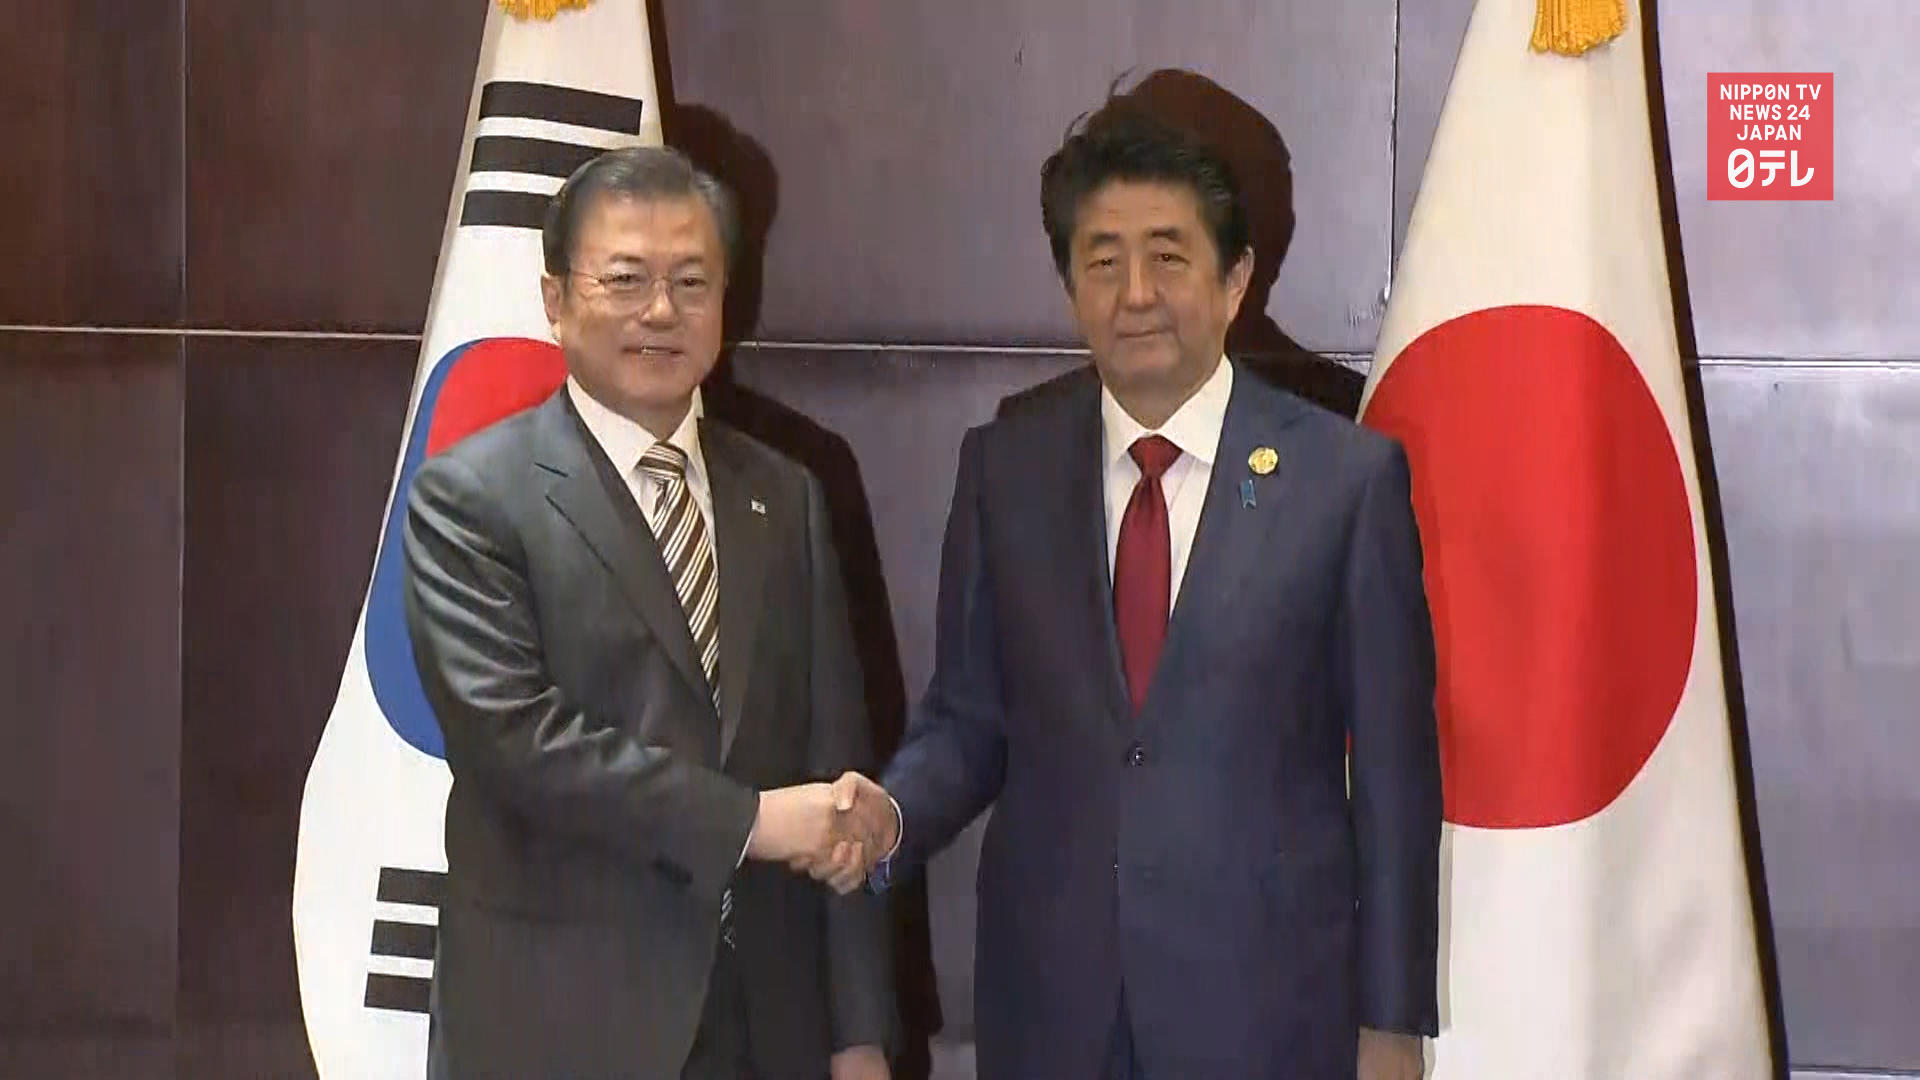 Japanese Prime Minister holds bilateral talks with South Korean President